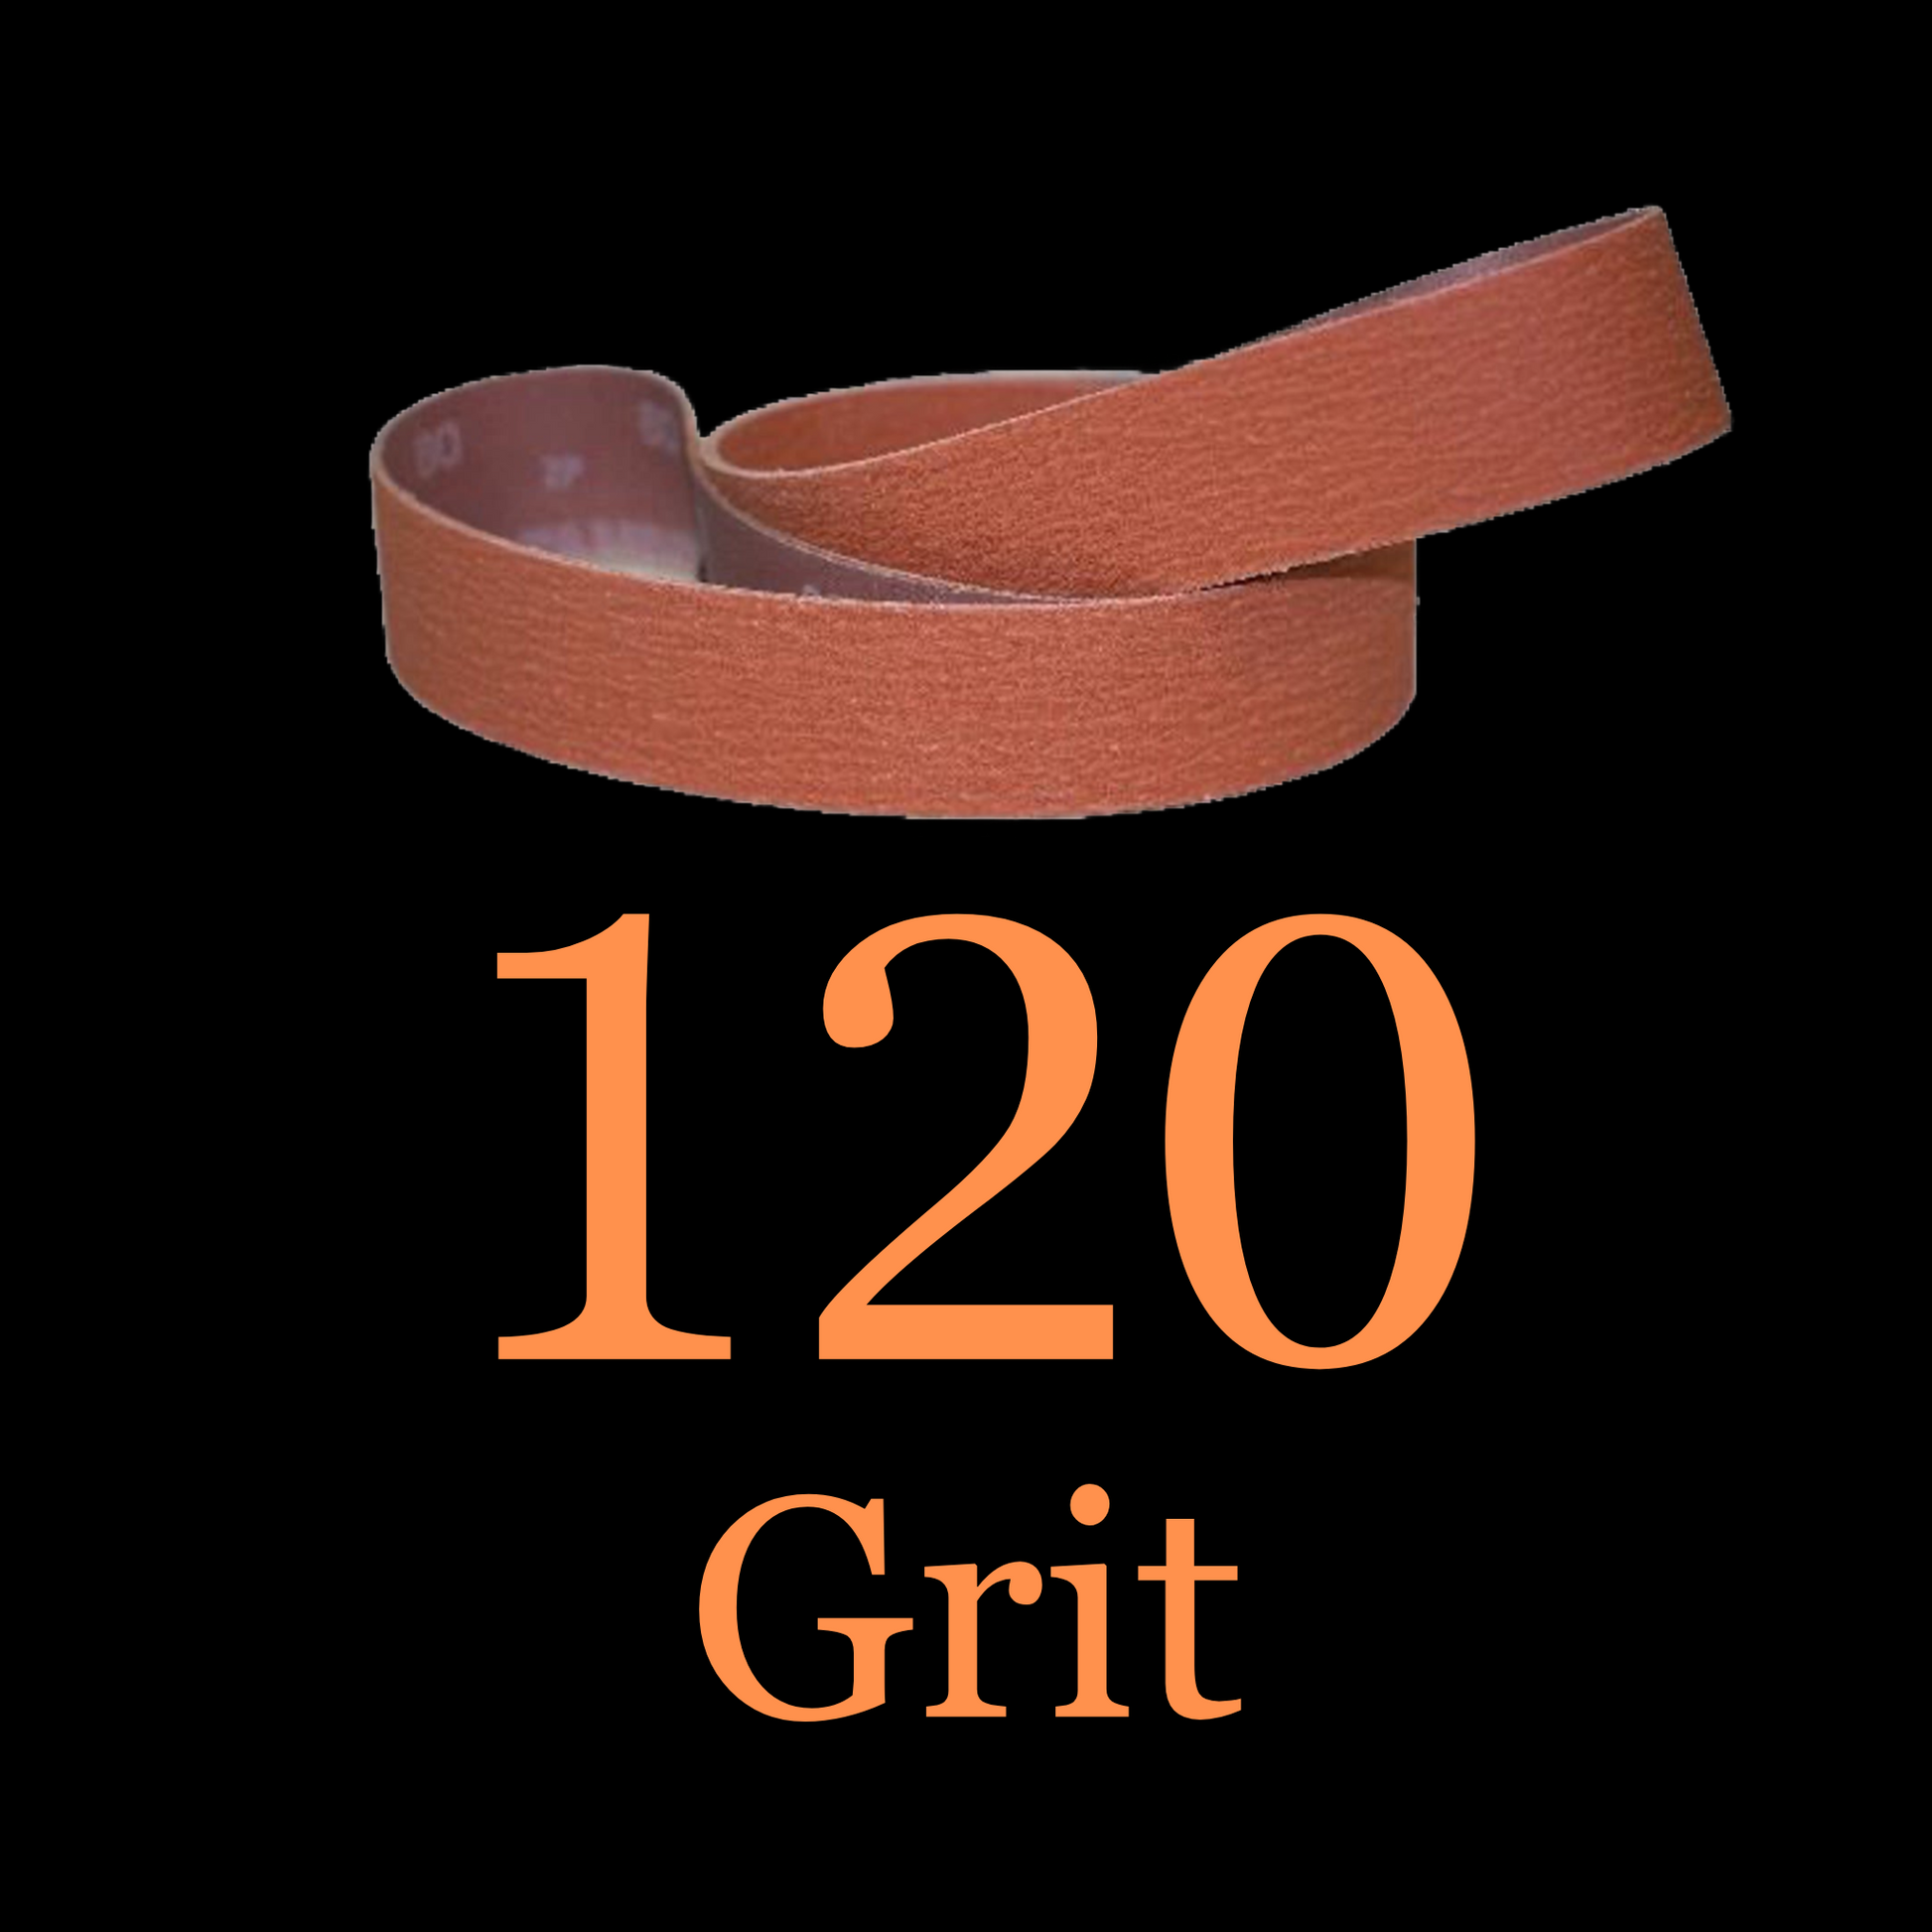 1” x 42” Blaze Ceramic Belt 120 Grit